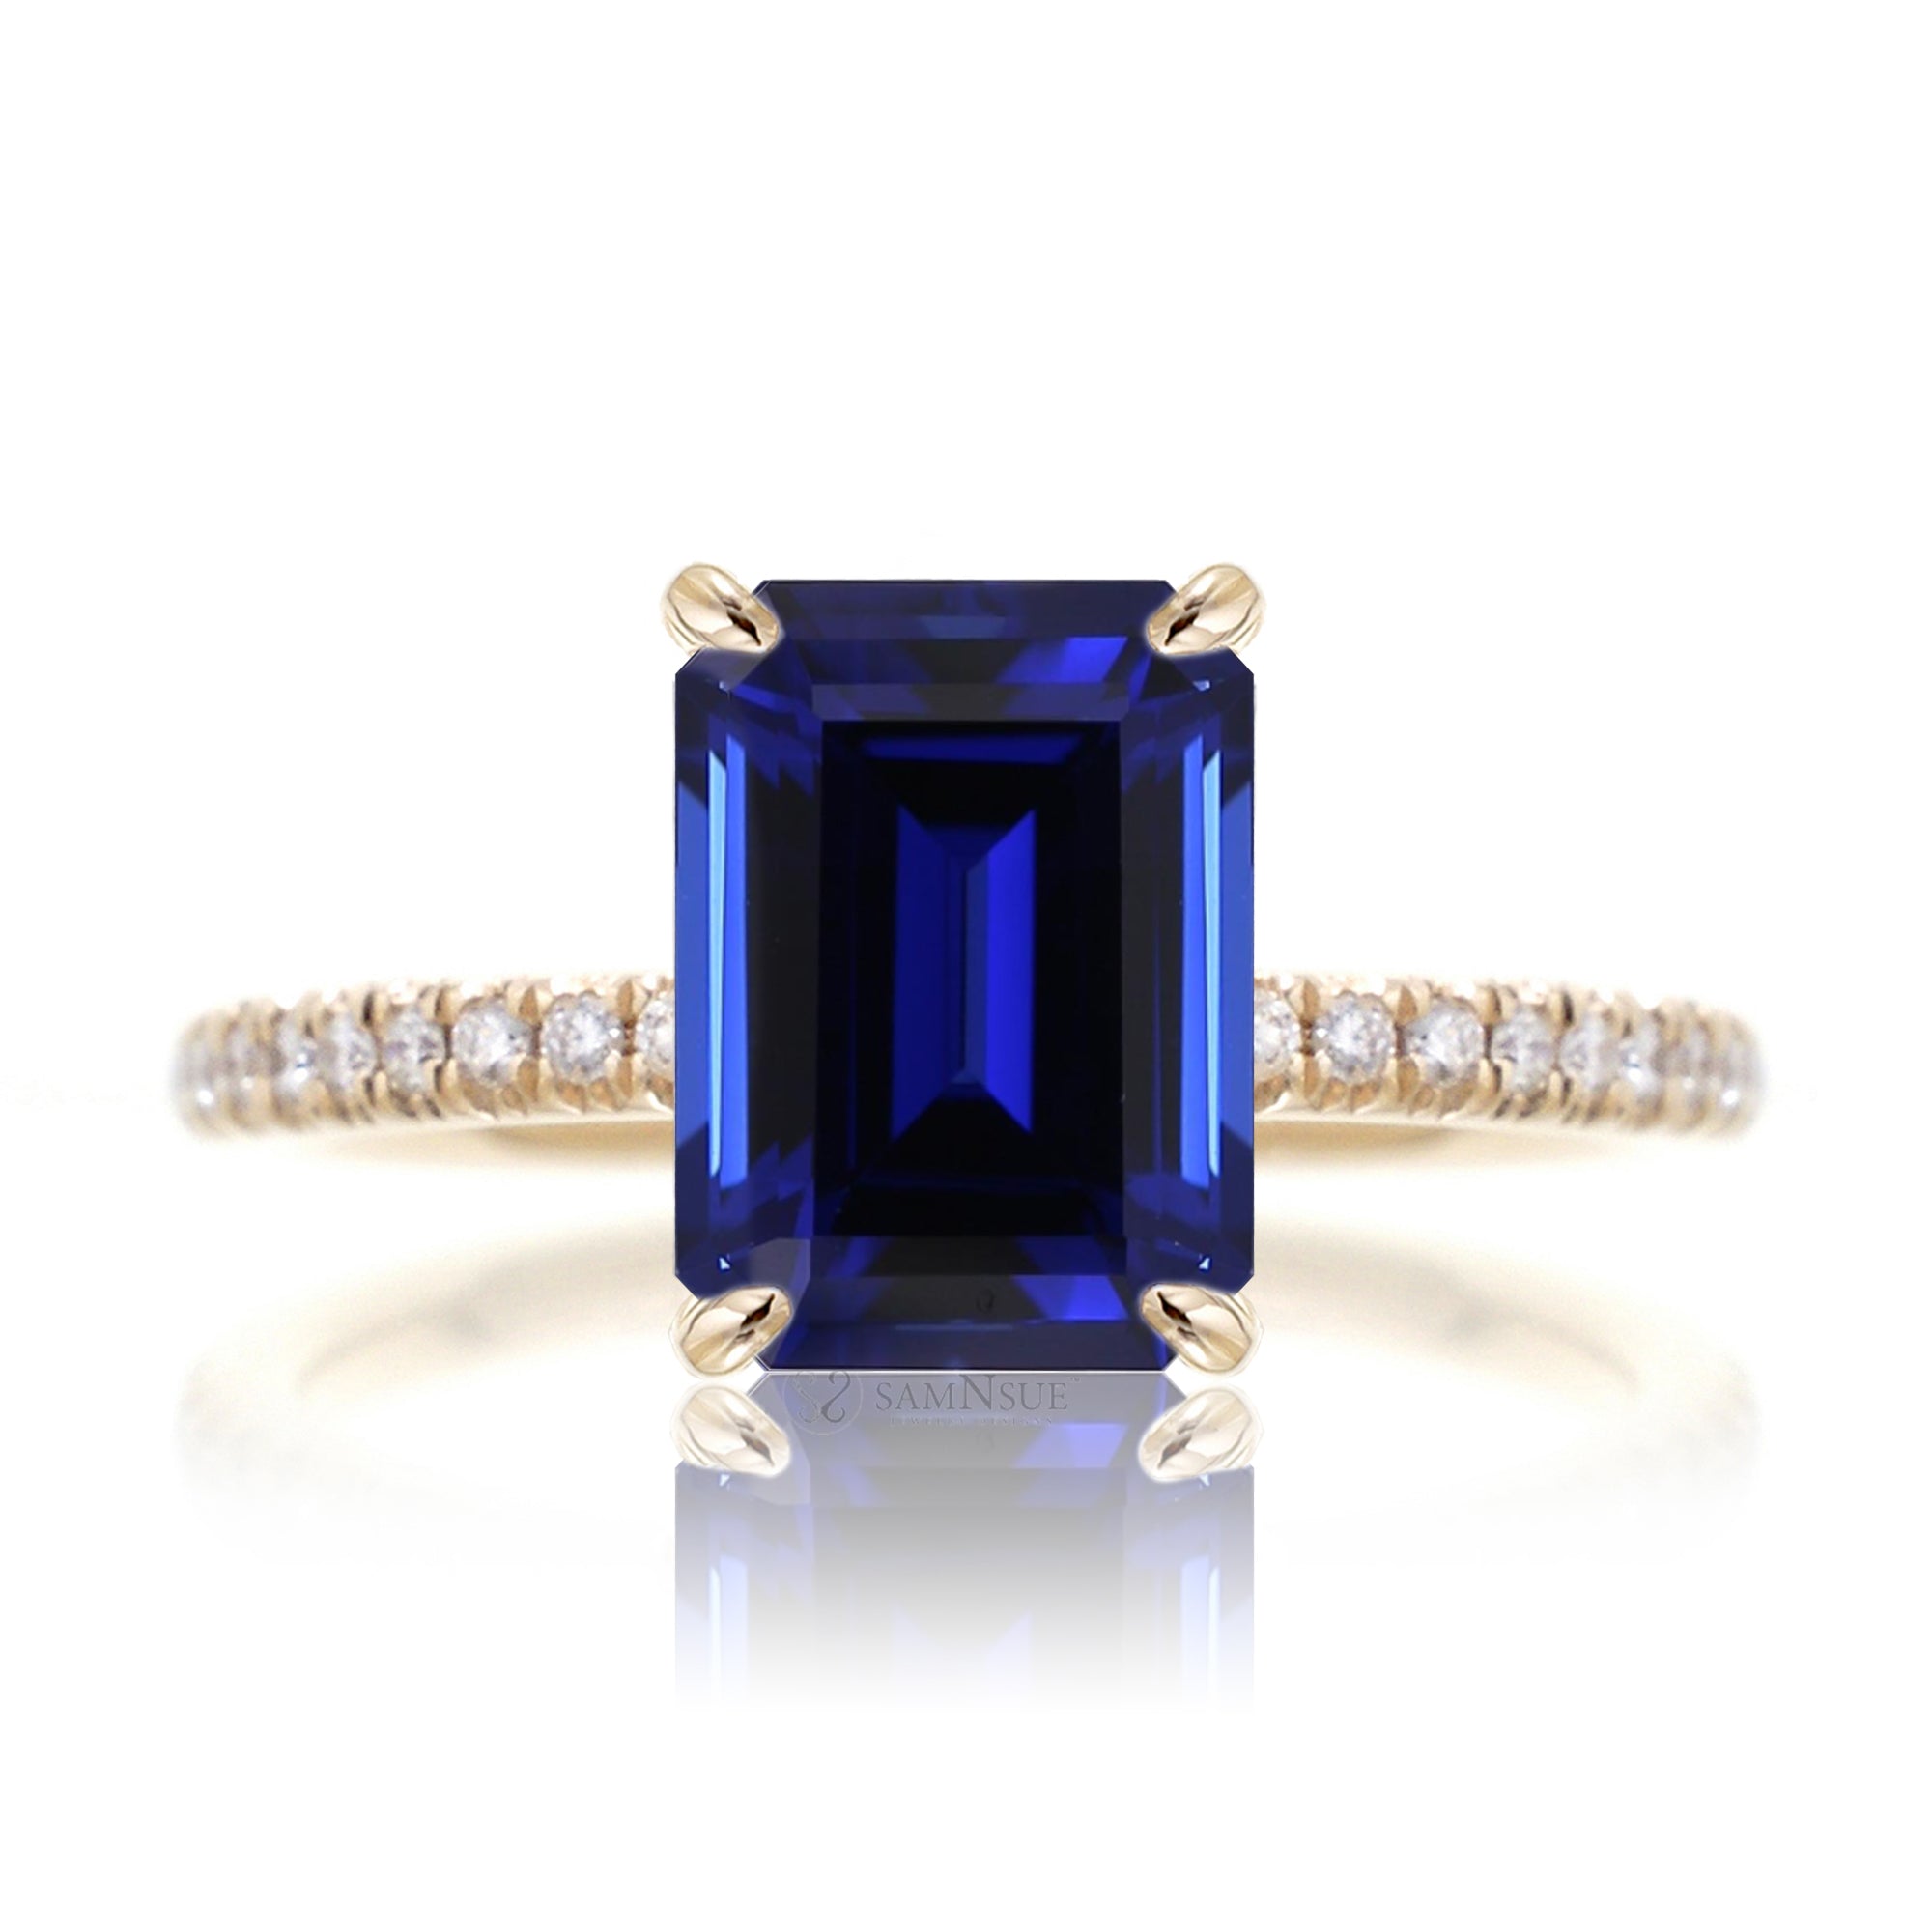 Emerald cut blue sapphire diamond engagement ring yellow gold - the Ava